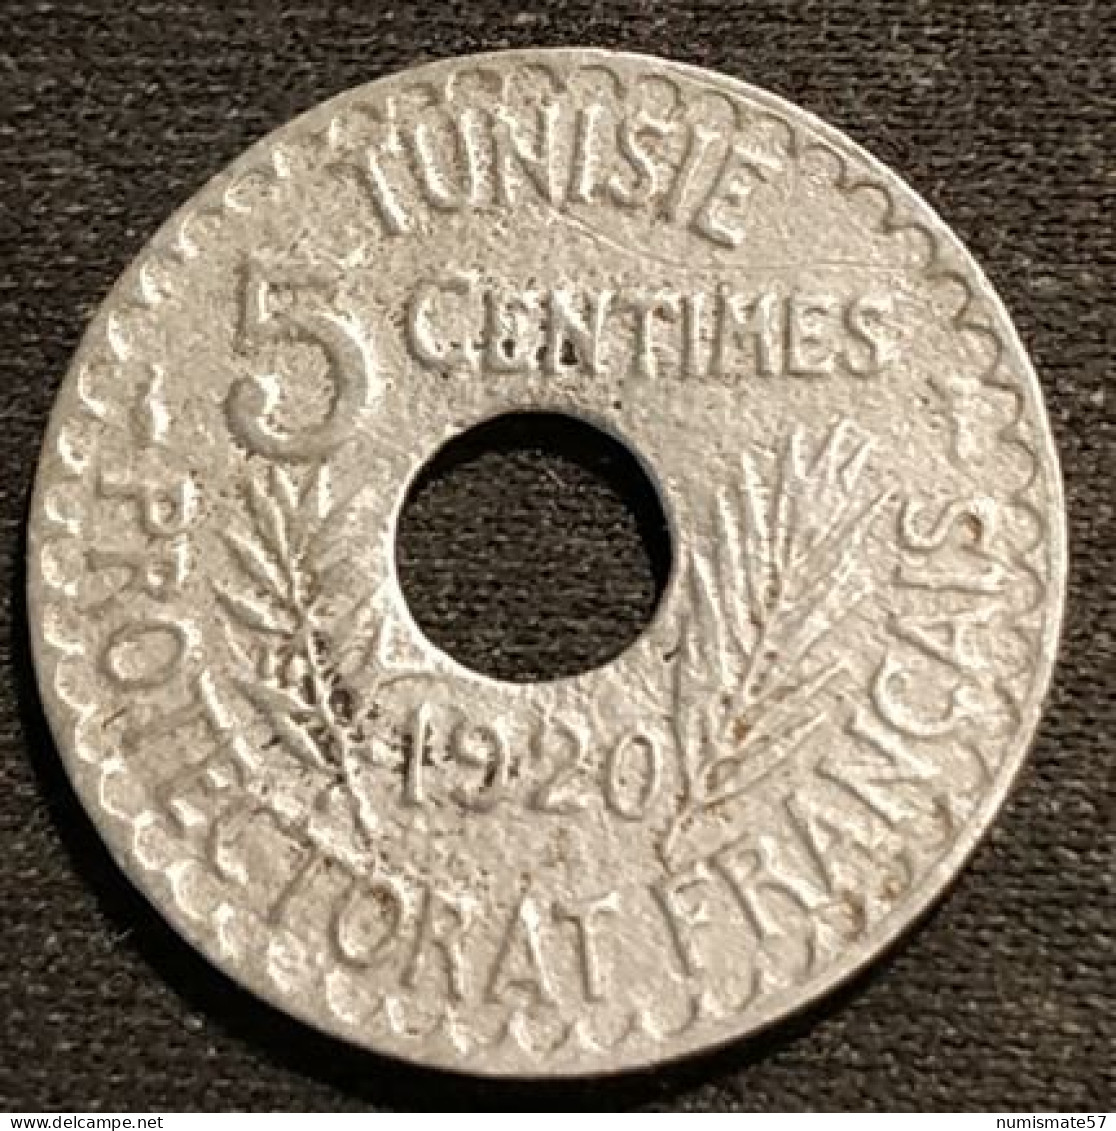 TUNISIE - TUNISIA - 5 CENTIMES 1920 ( 1339 ) - Grand Module - Muhammad Al-Nasir - Protectorat Français - KM 242 - Tunesië